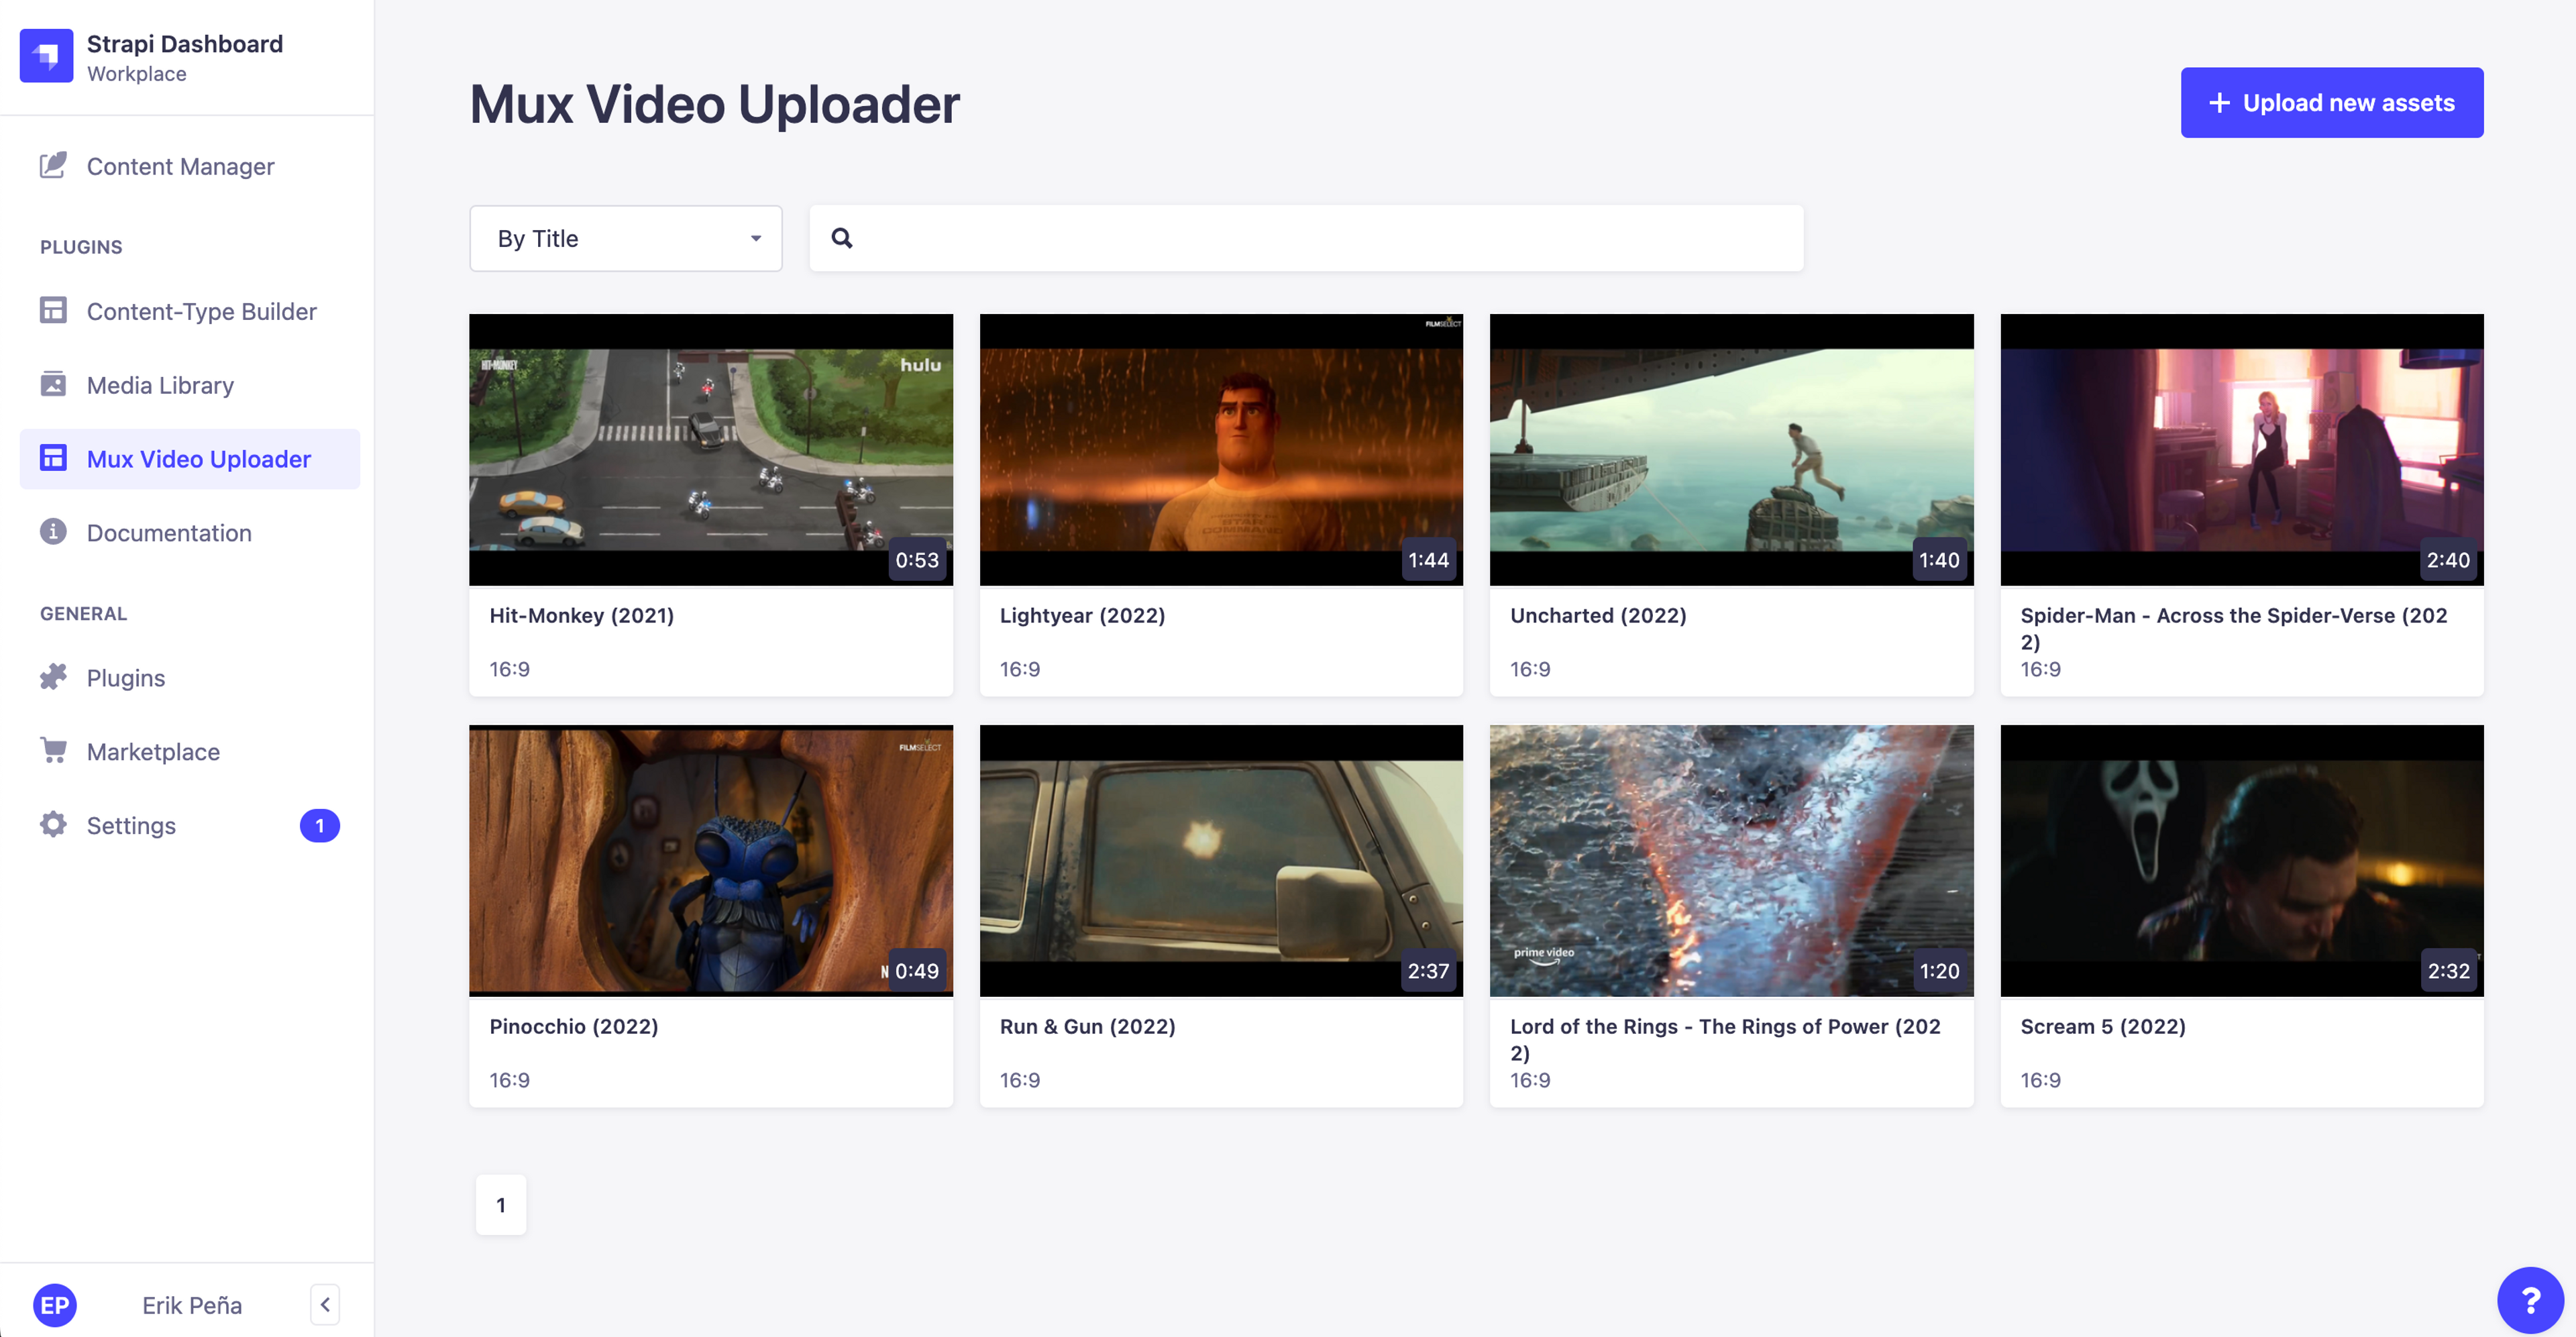 Mux Video Uploader - Landing Screen